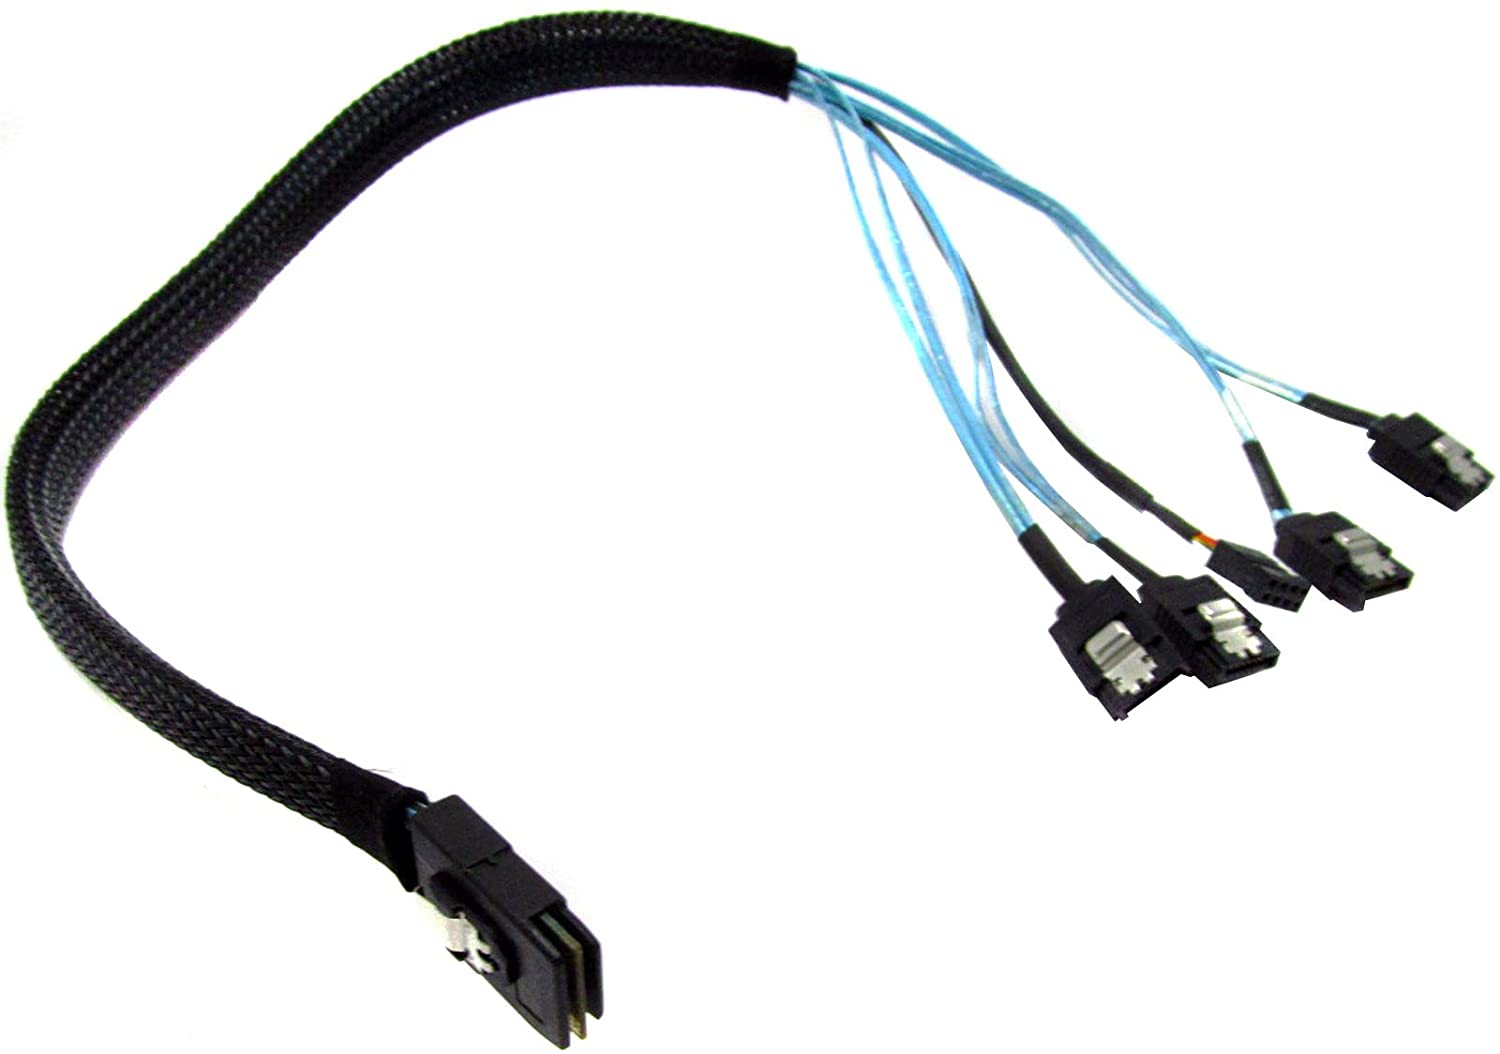 576925-001 HP 4-lane SAS Hard Drive Cable for Ml110 G6